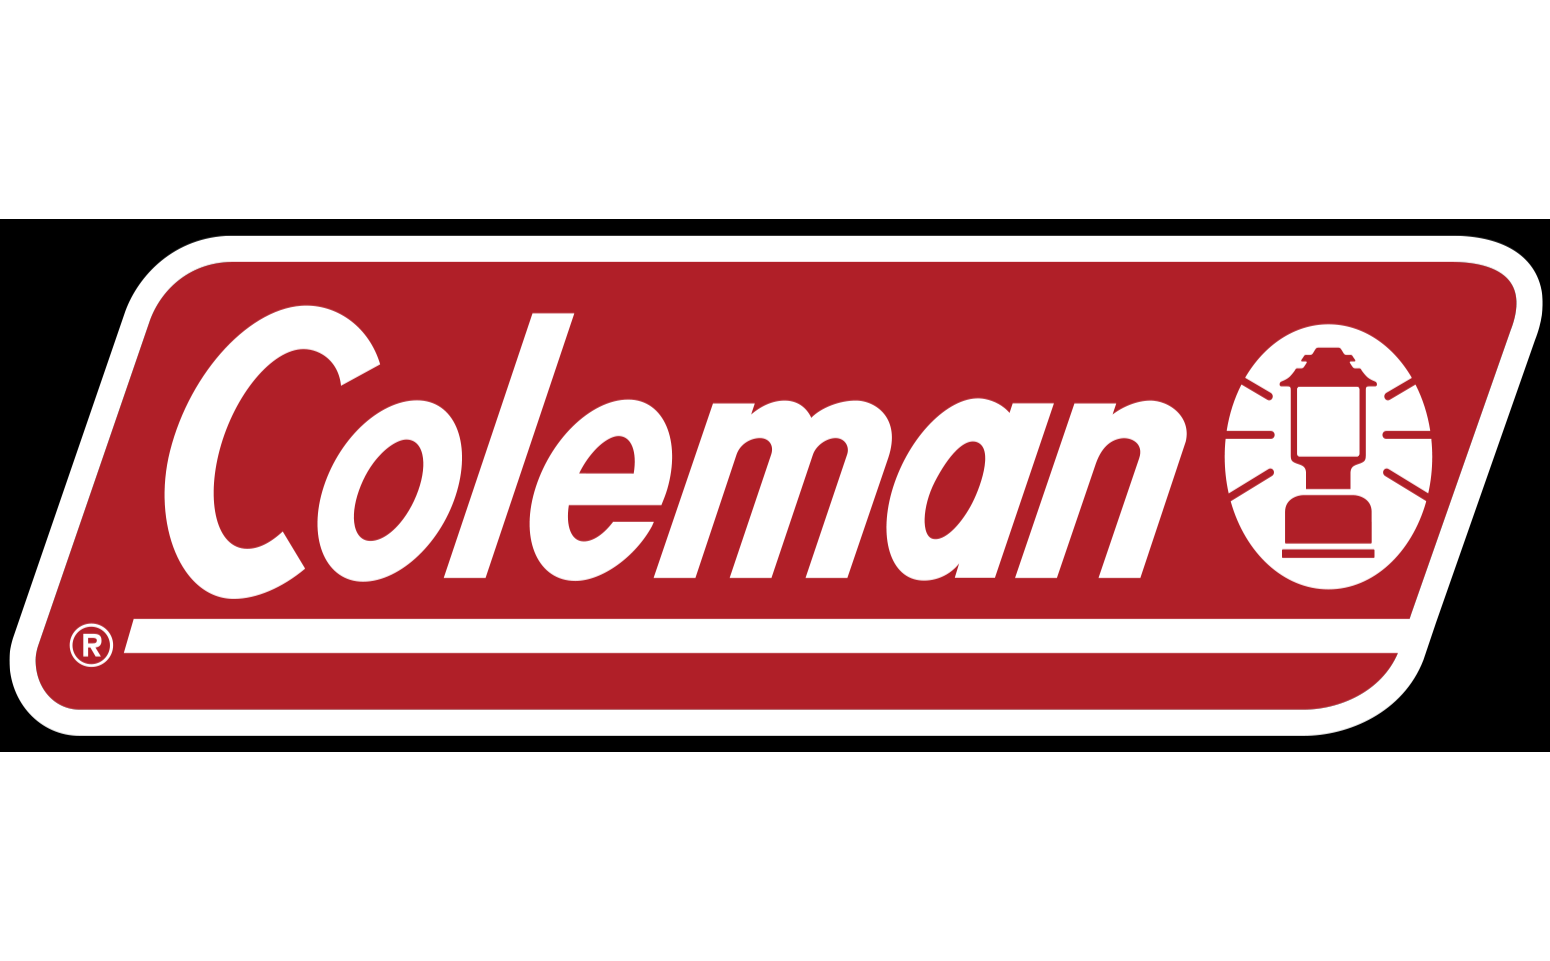 Coleman-科勒曼